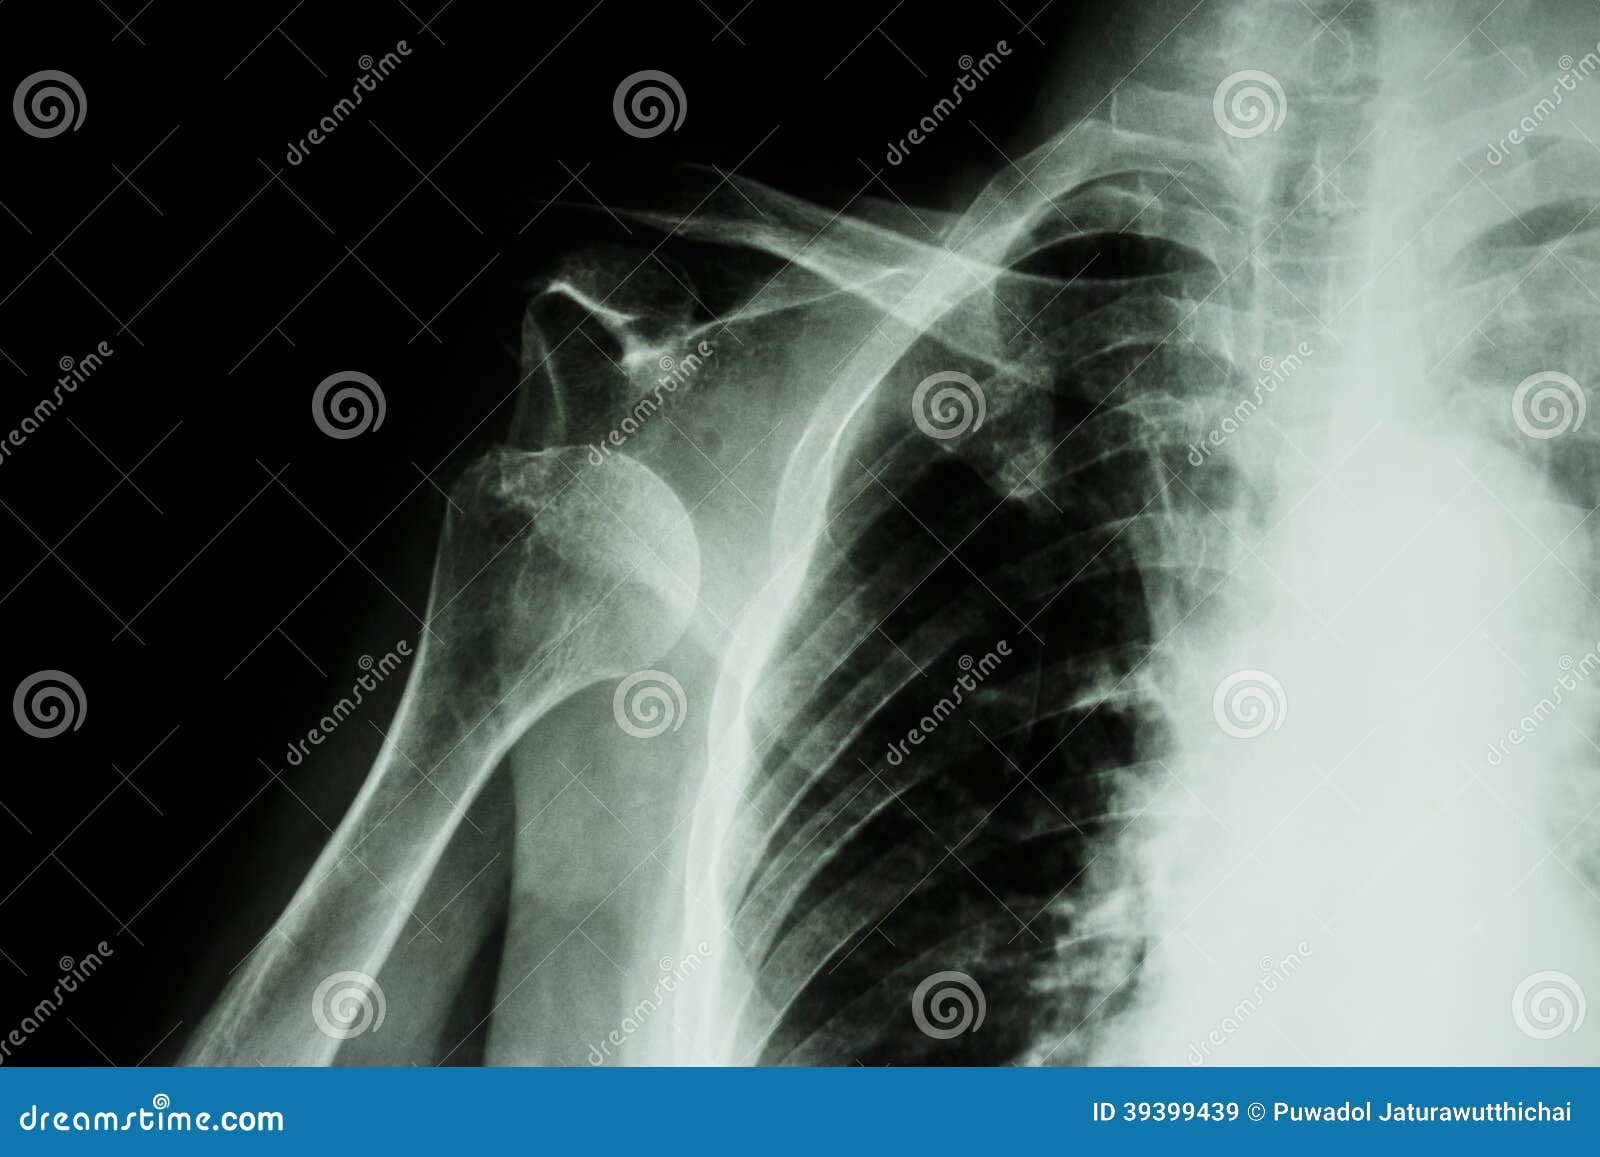 x-ray anterior shoulder dislocation